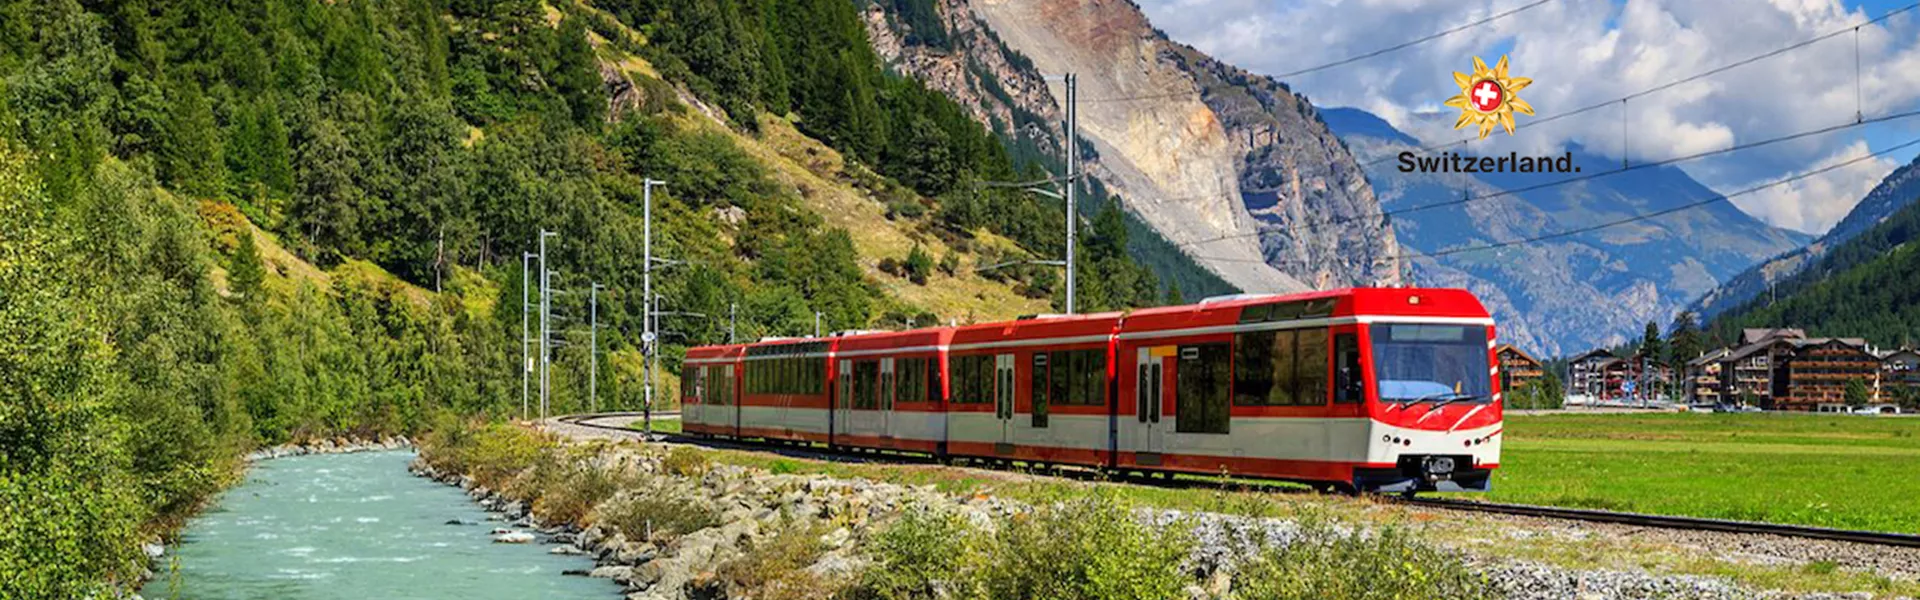 Switzerland Train With Logo